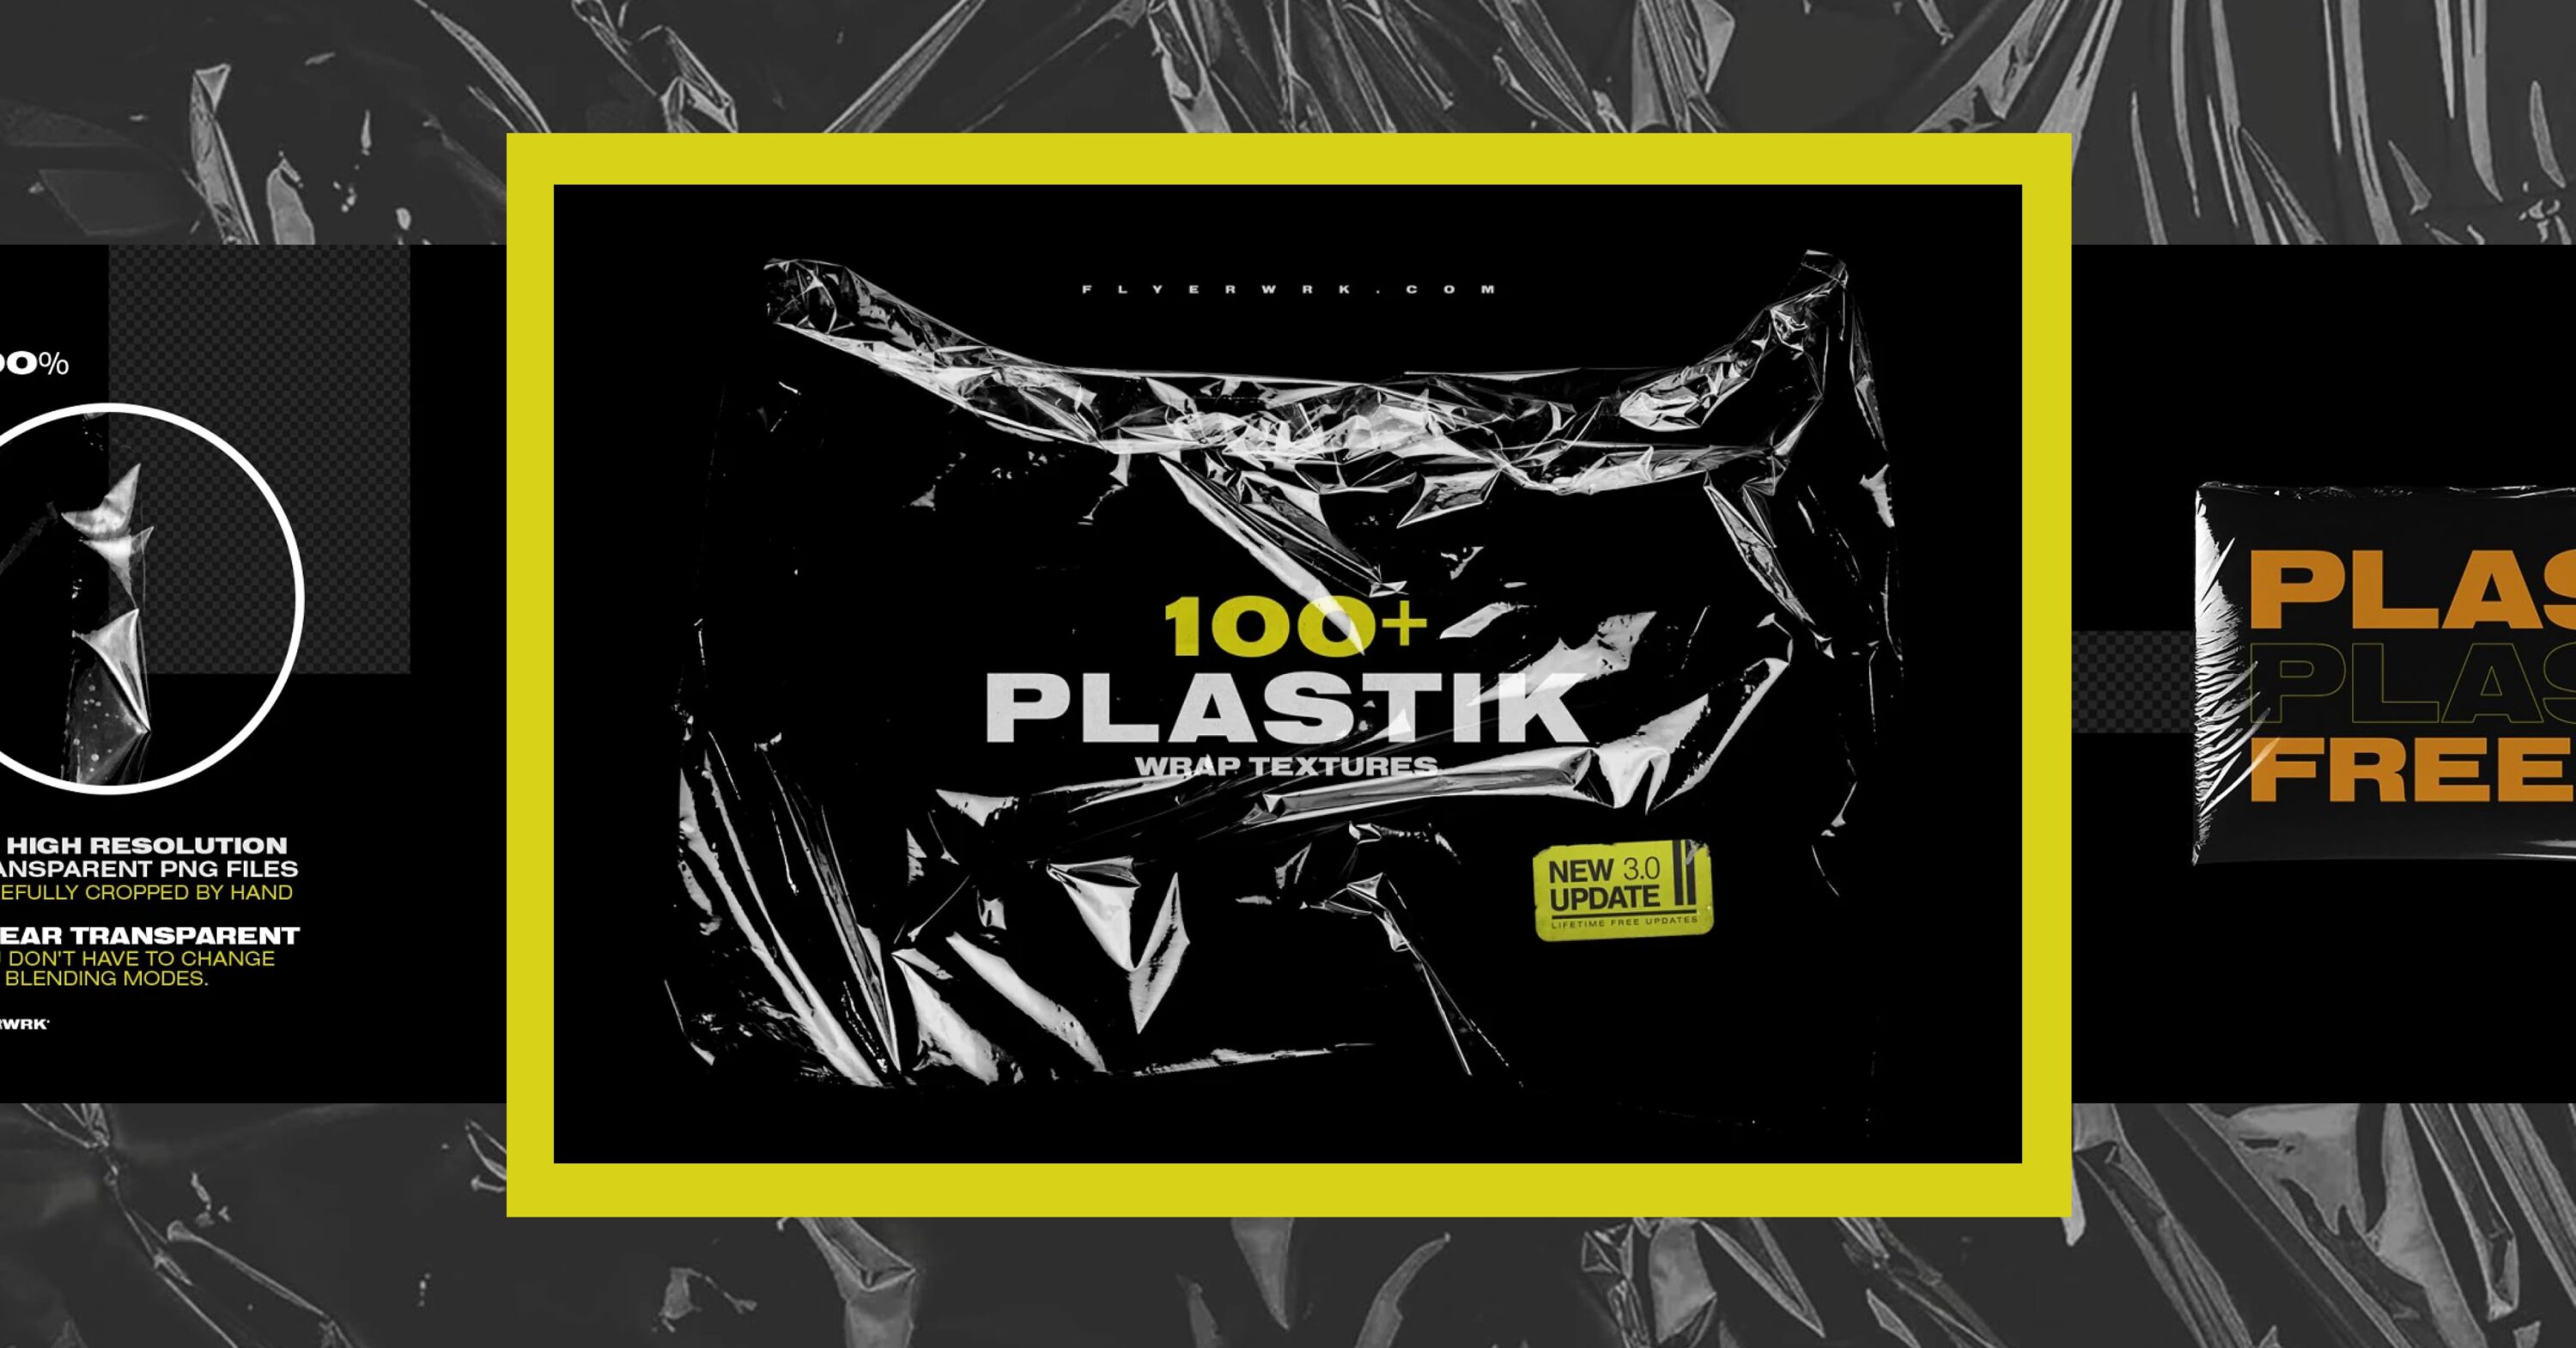 100 Plastic Wrap Textures facebook image.